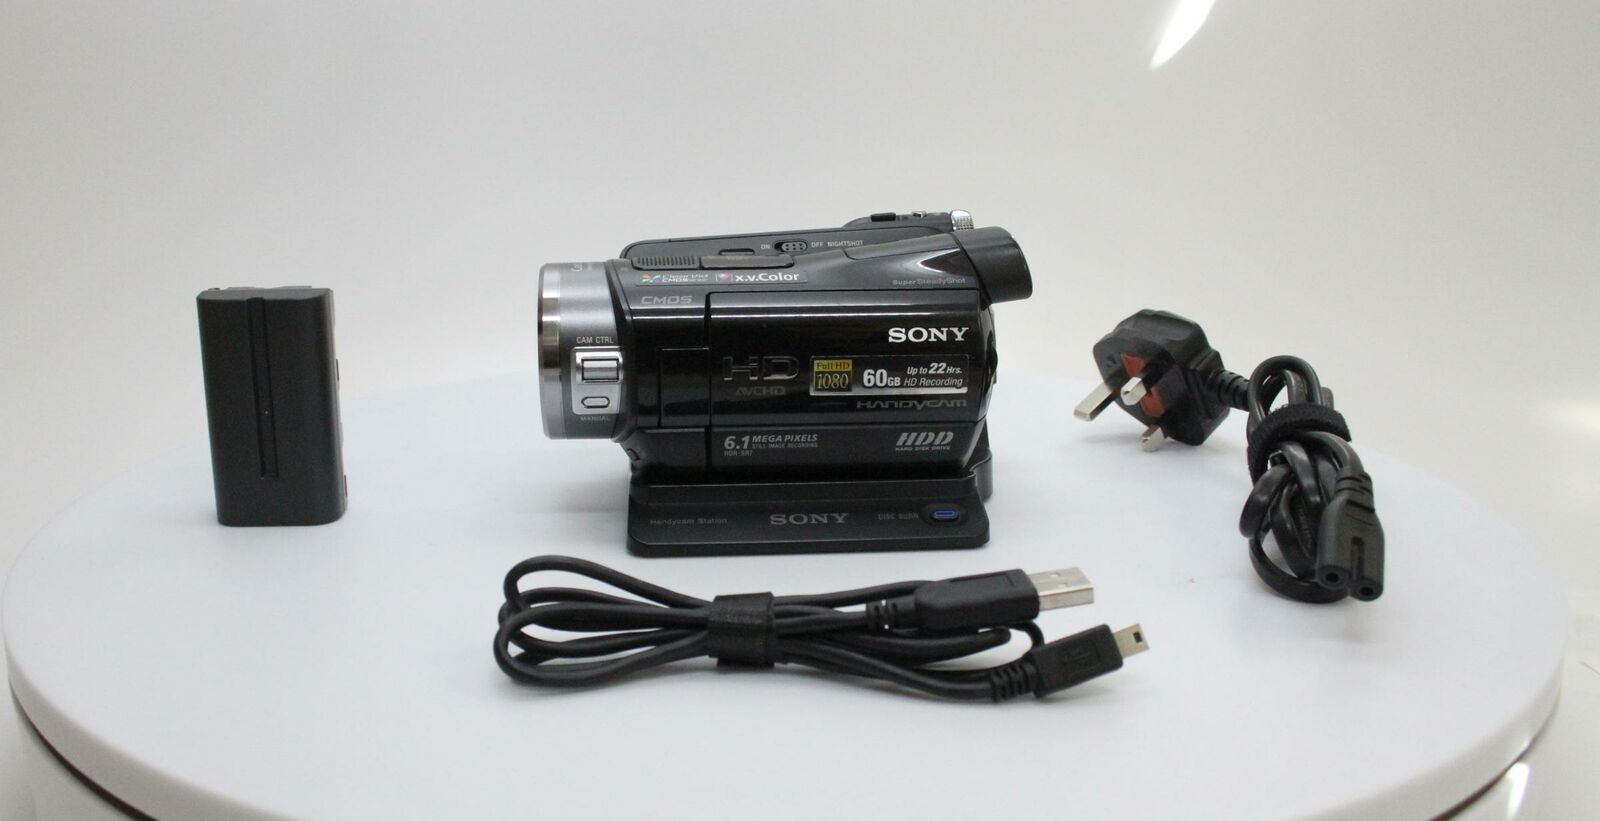 Sony Handycam HDR-SR7 (60 GB) Hard Drive Camcorder for sale online 